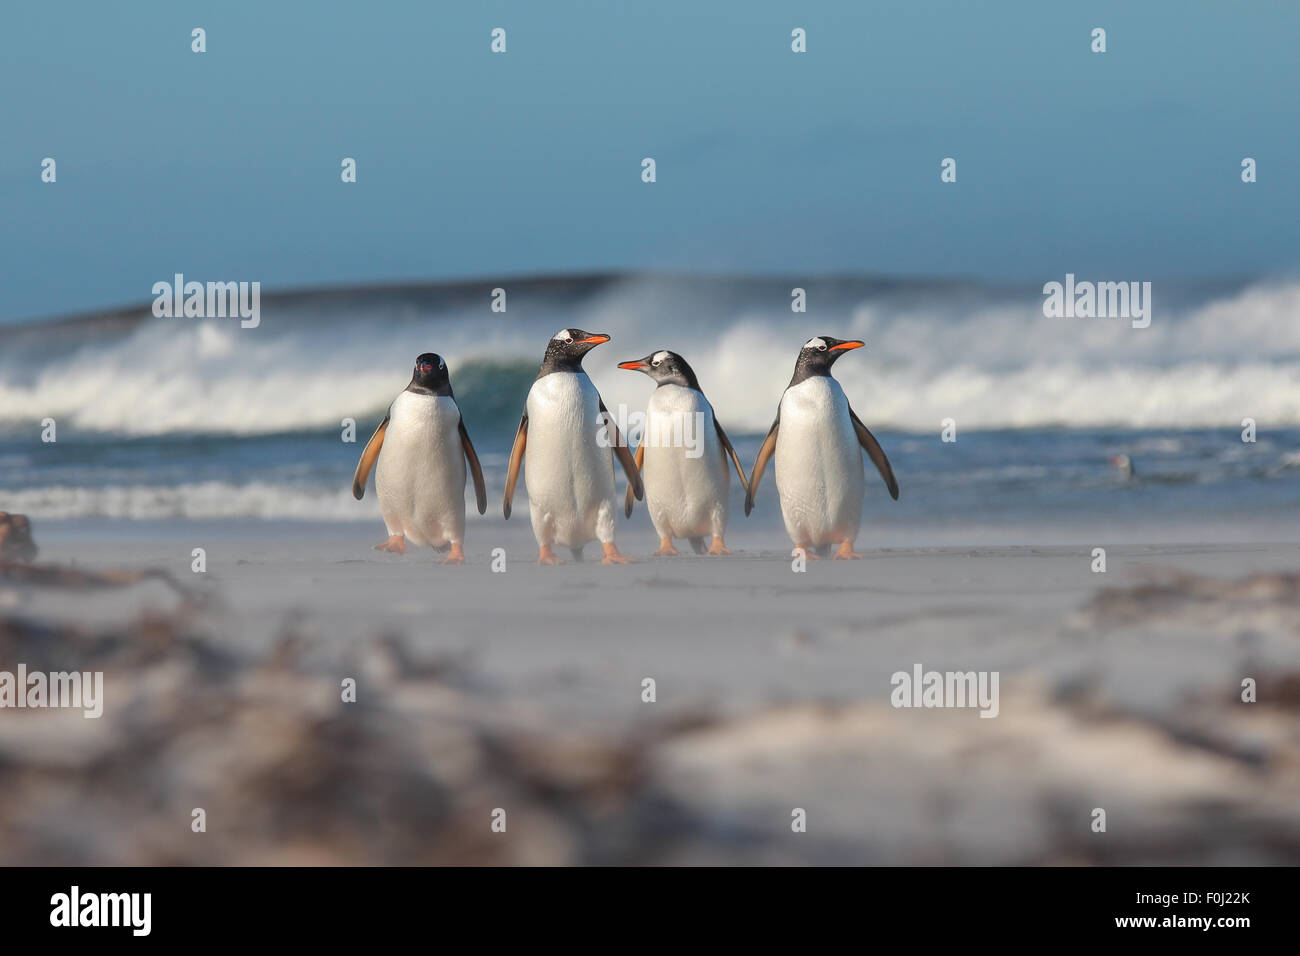 Four Gentoo penguins walking from the sea. Bertha's Beach, Falkland Islands. Stock Photo